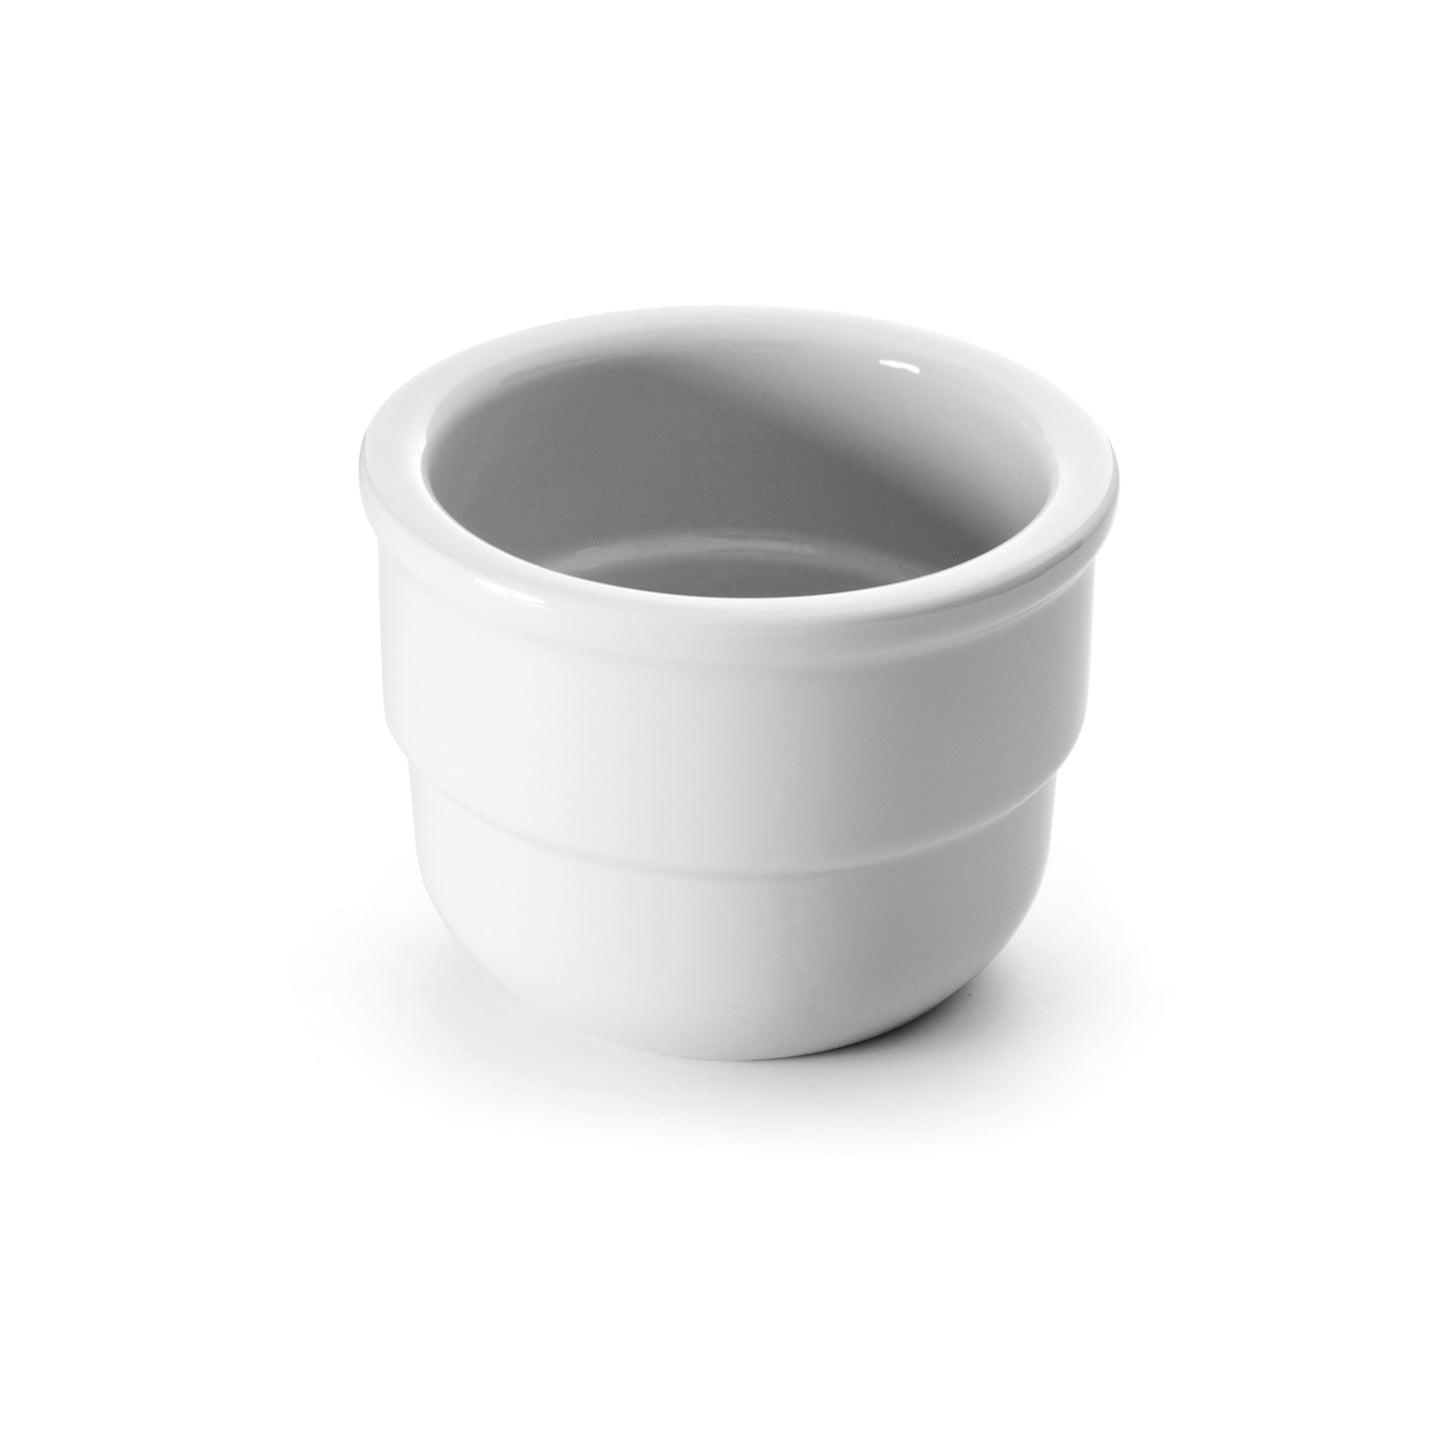 Mauviel Spare Porcelain Insert for Bain Marie / 12cm